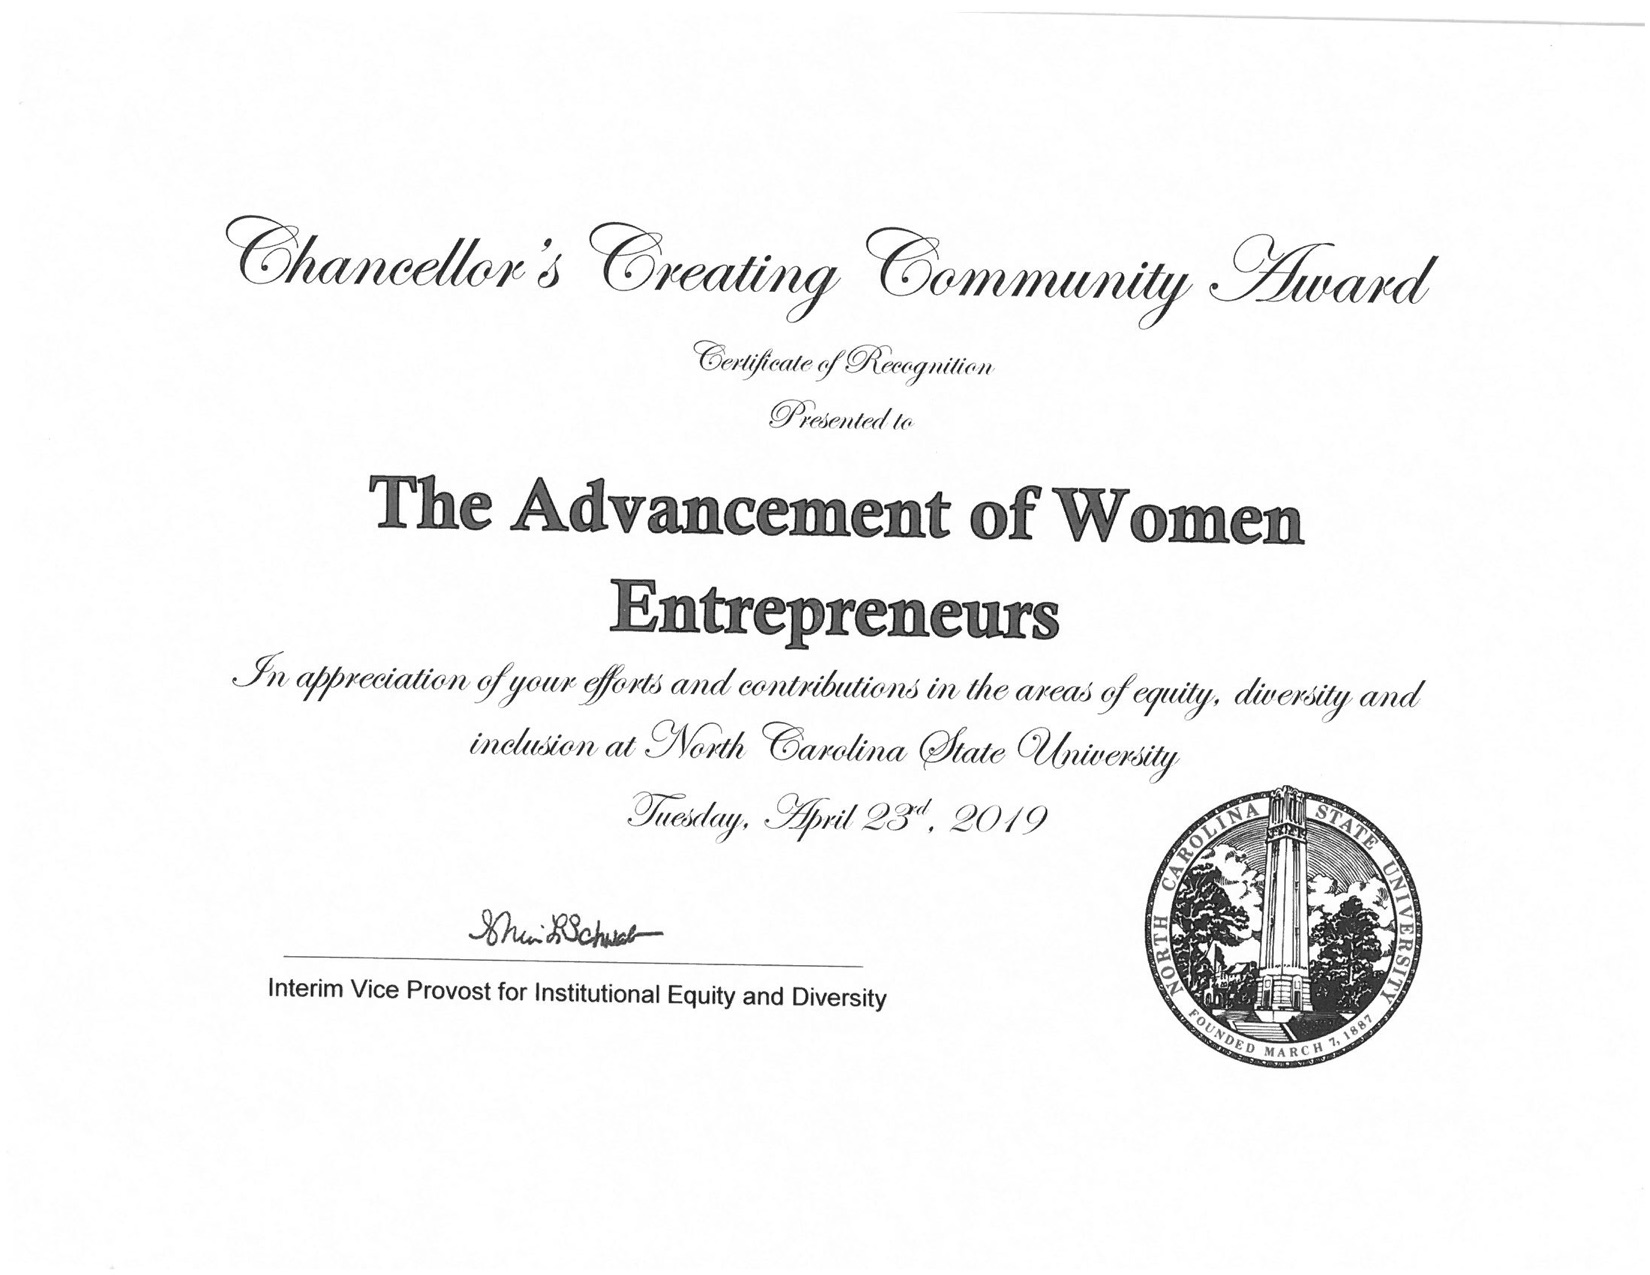 Chancellor's Creating Community Award